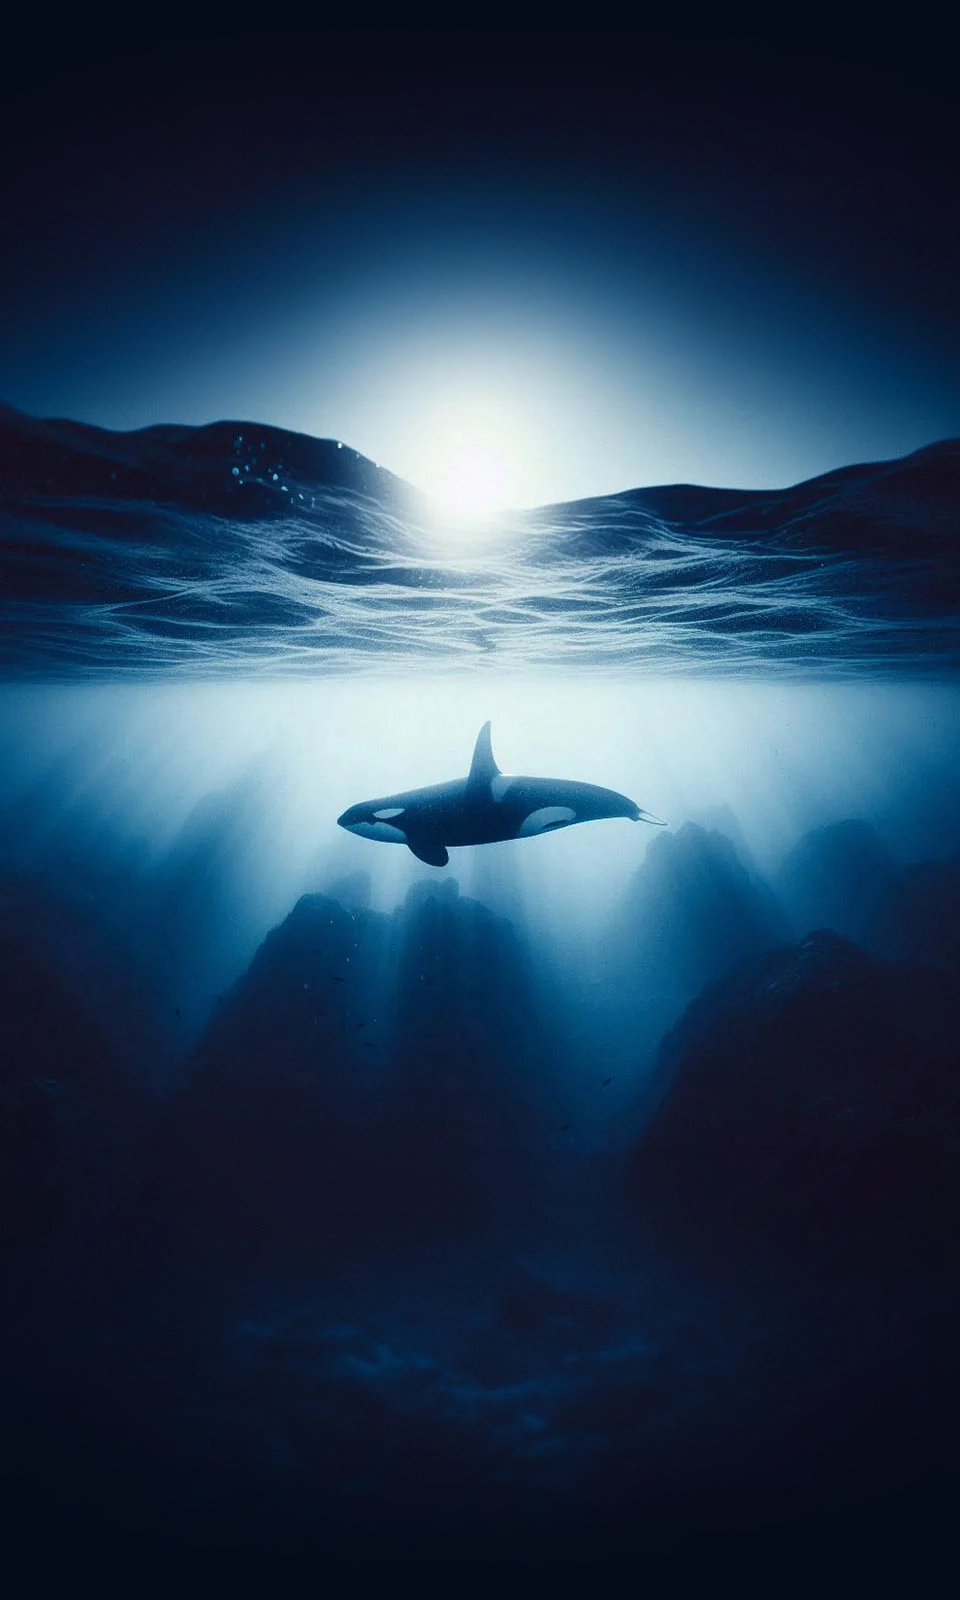 Killer whale swims in the ocean